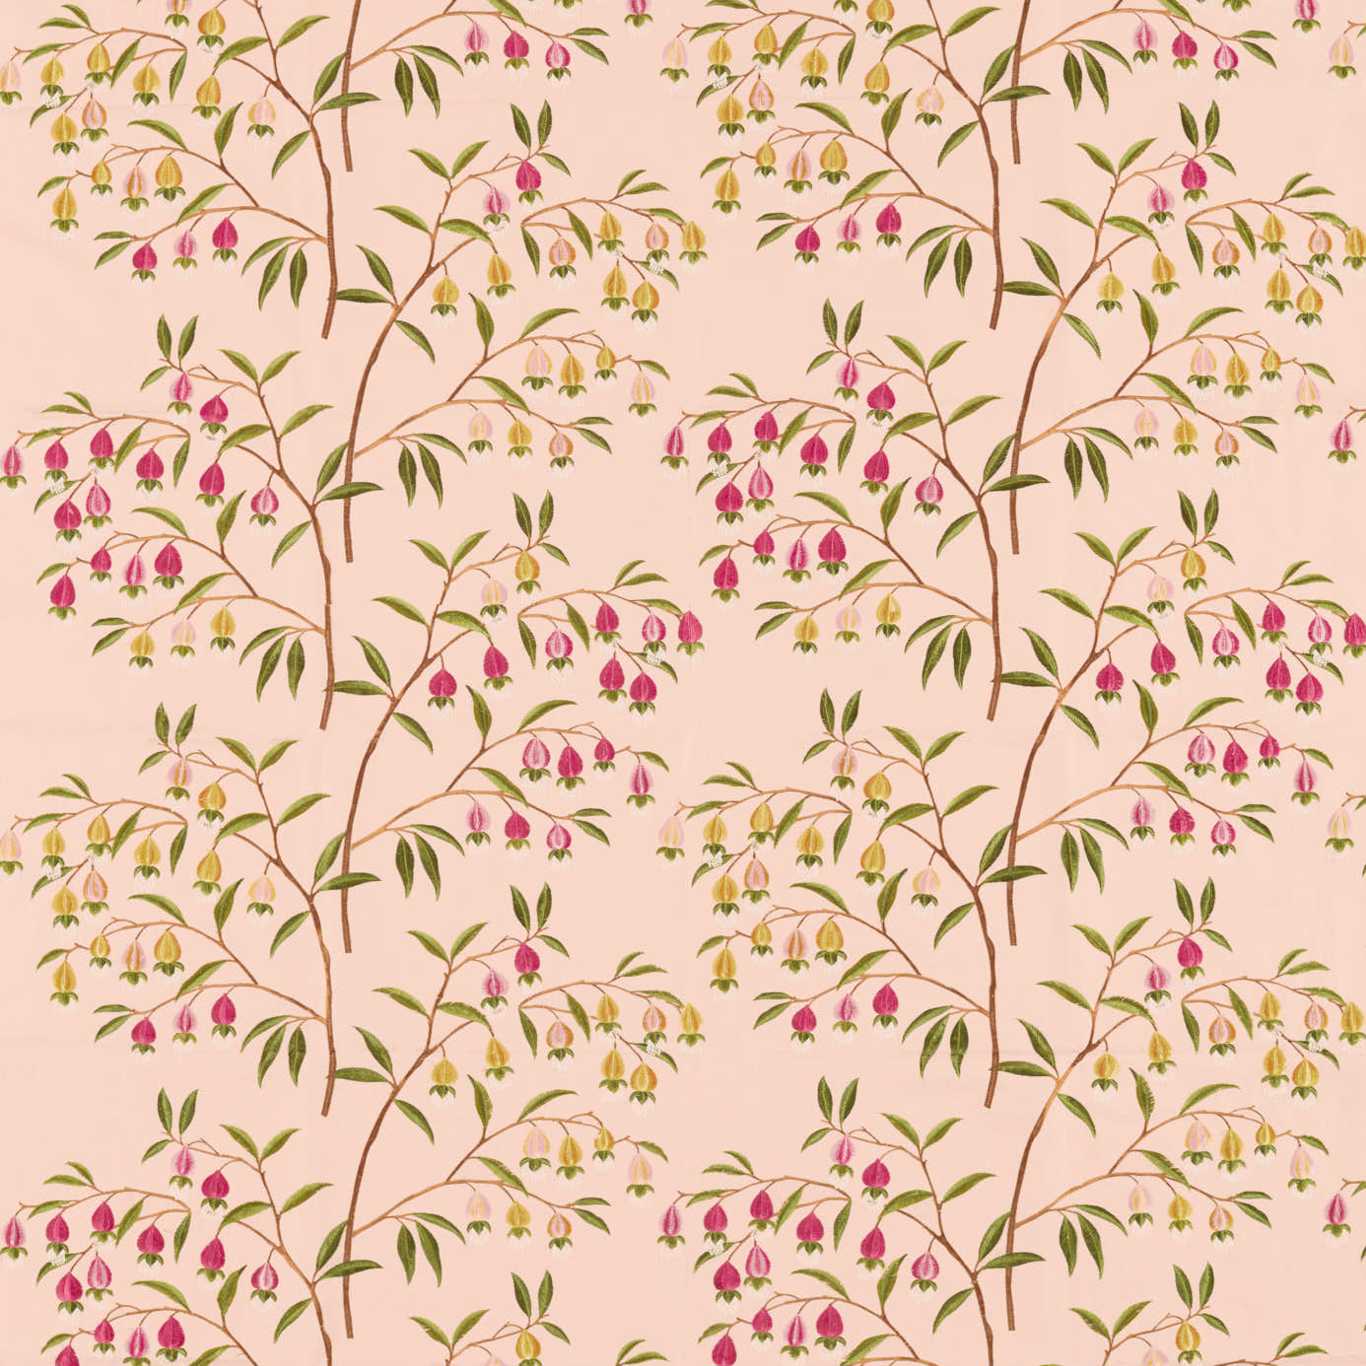 Chinese Lantern Fabric by Sanderson - DWAT237269 - Peach Blossom